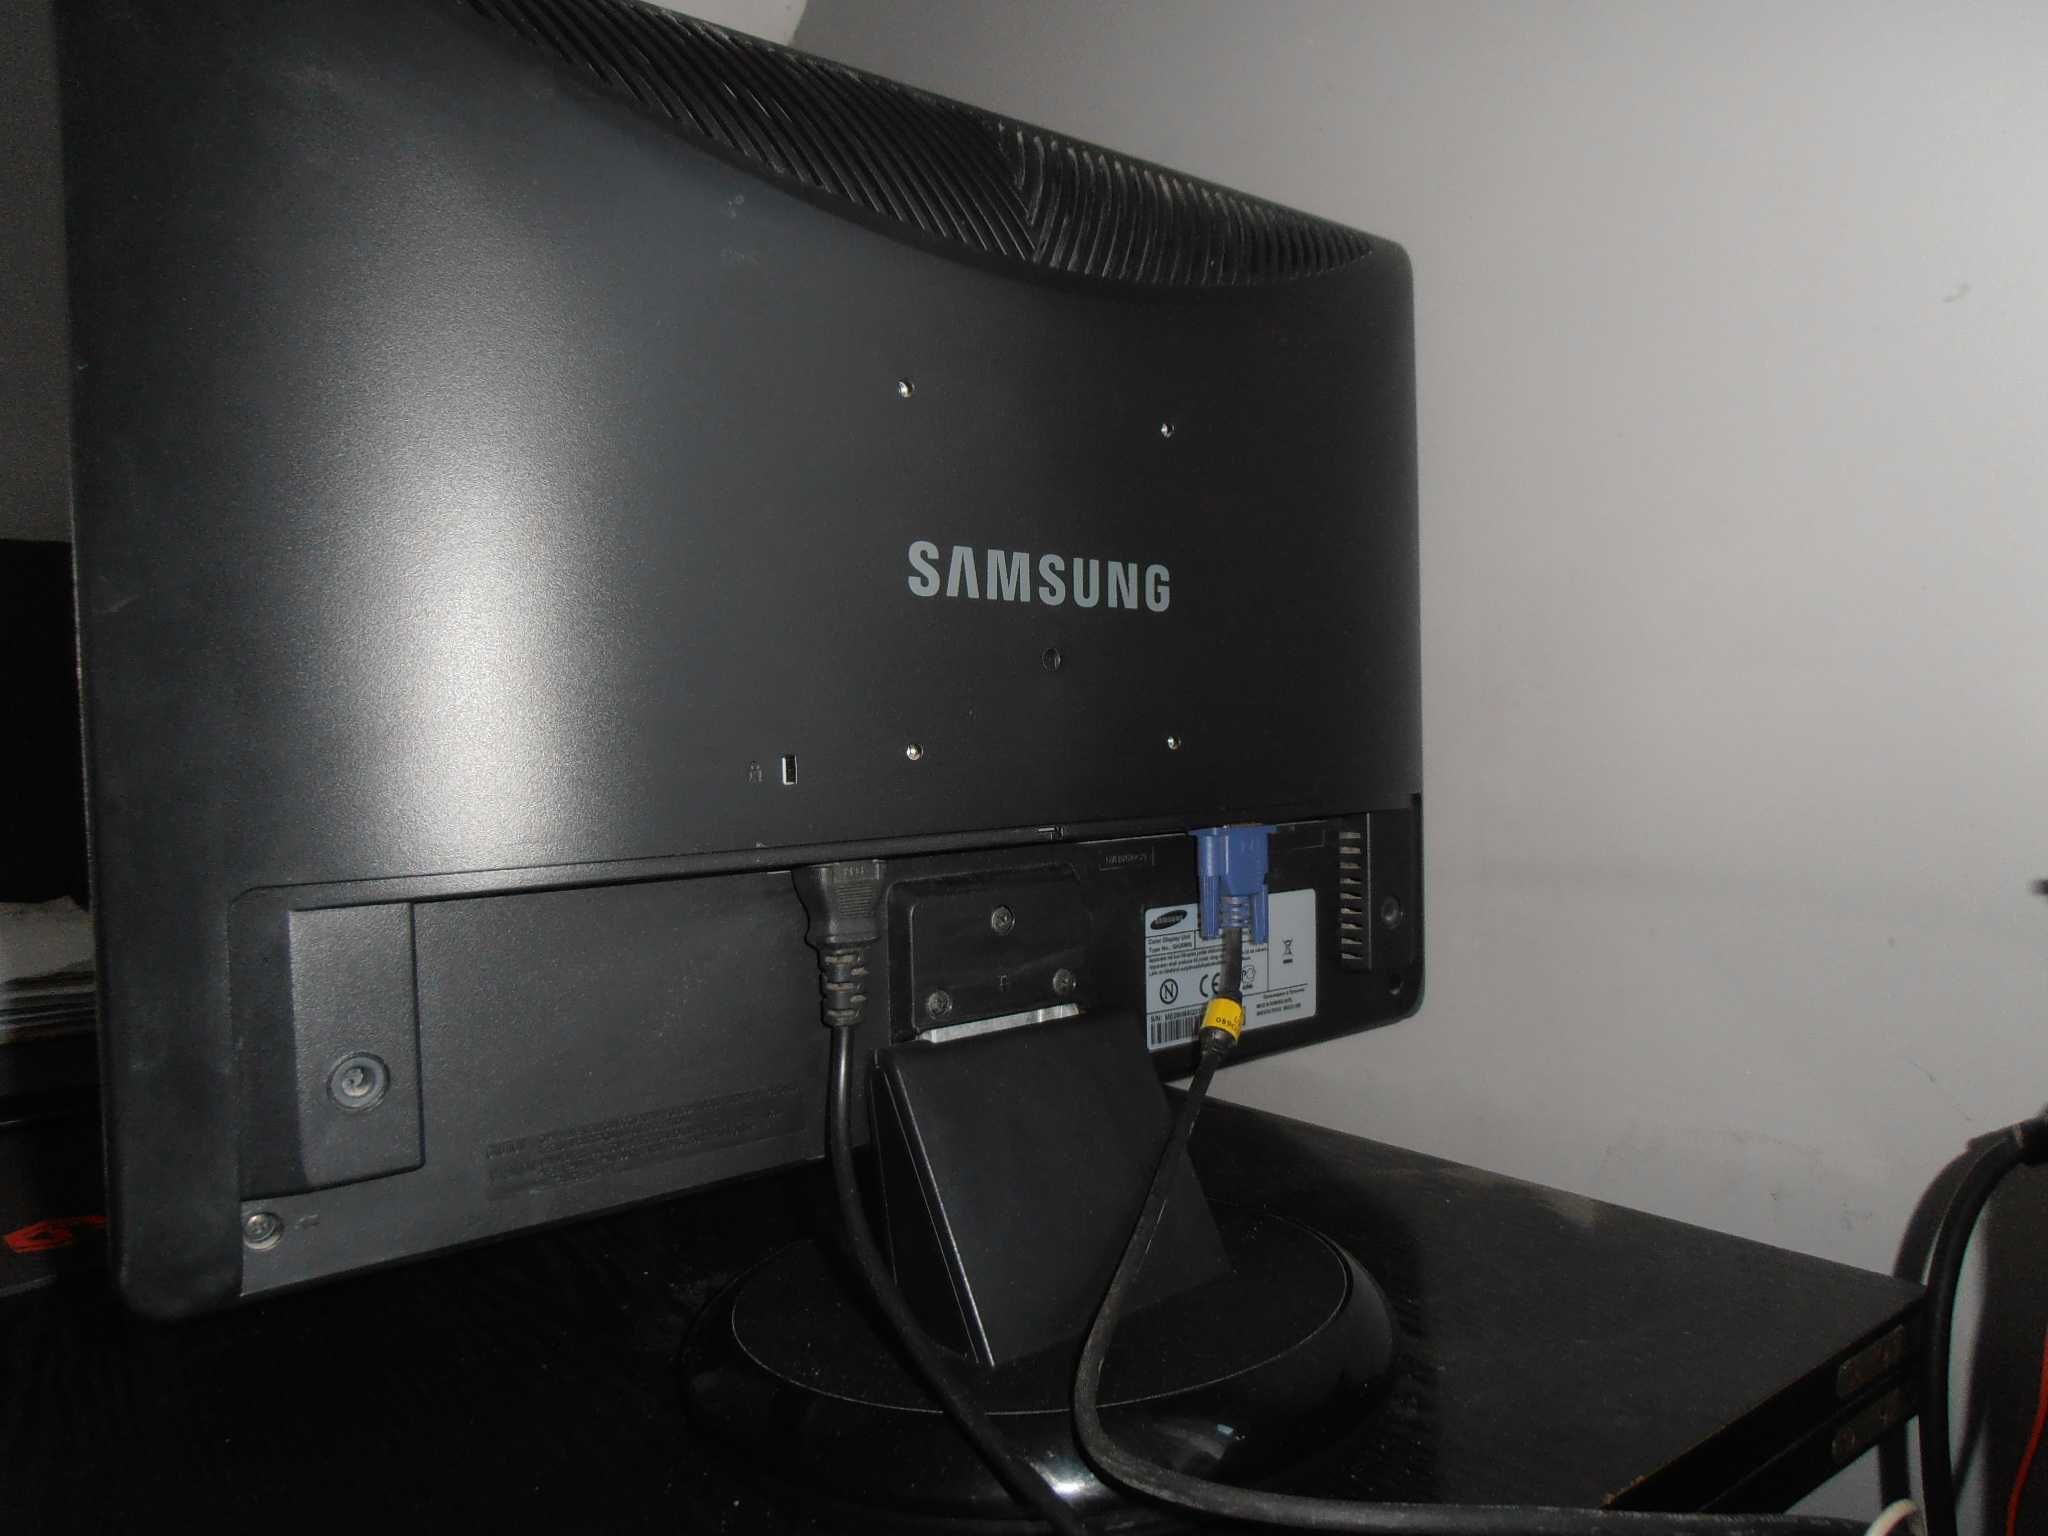 Monitor Samsung 206BW  20" 1680x1050 DVI/ D-SUB{VGA)- Czarny. Wysyłka!